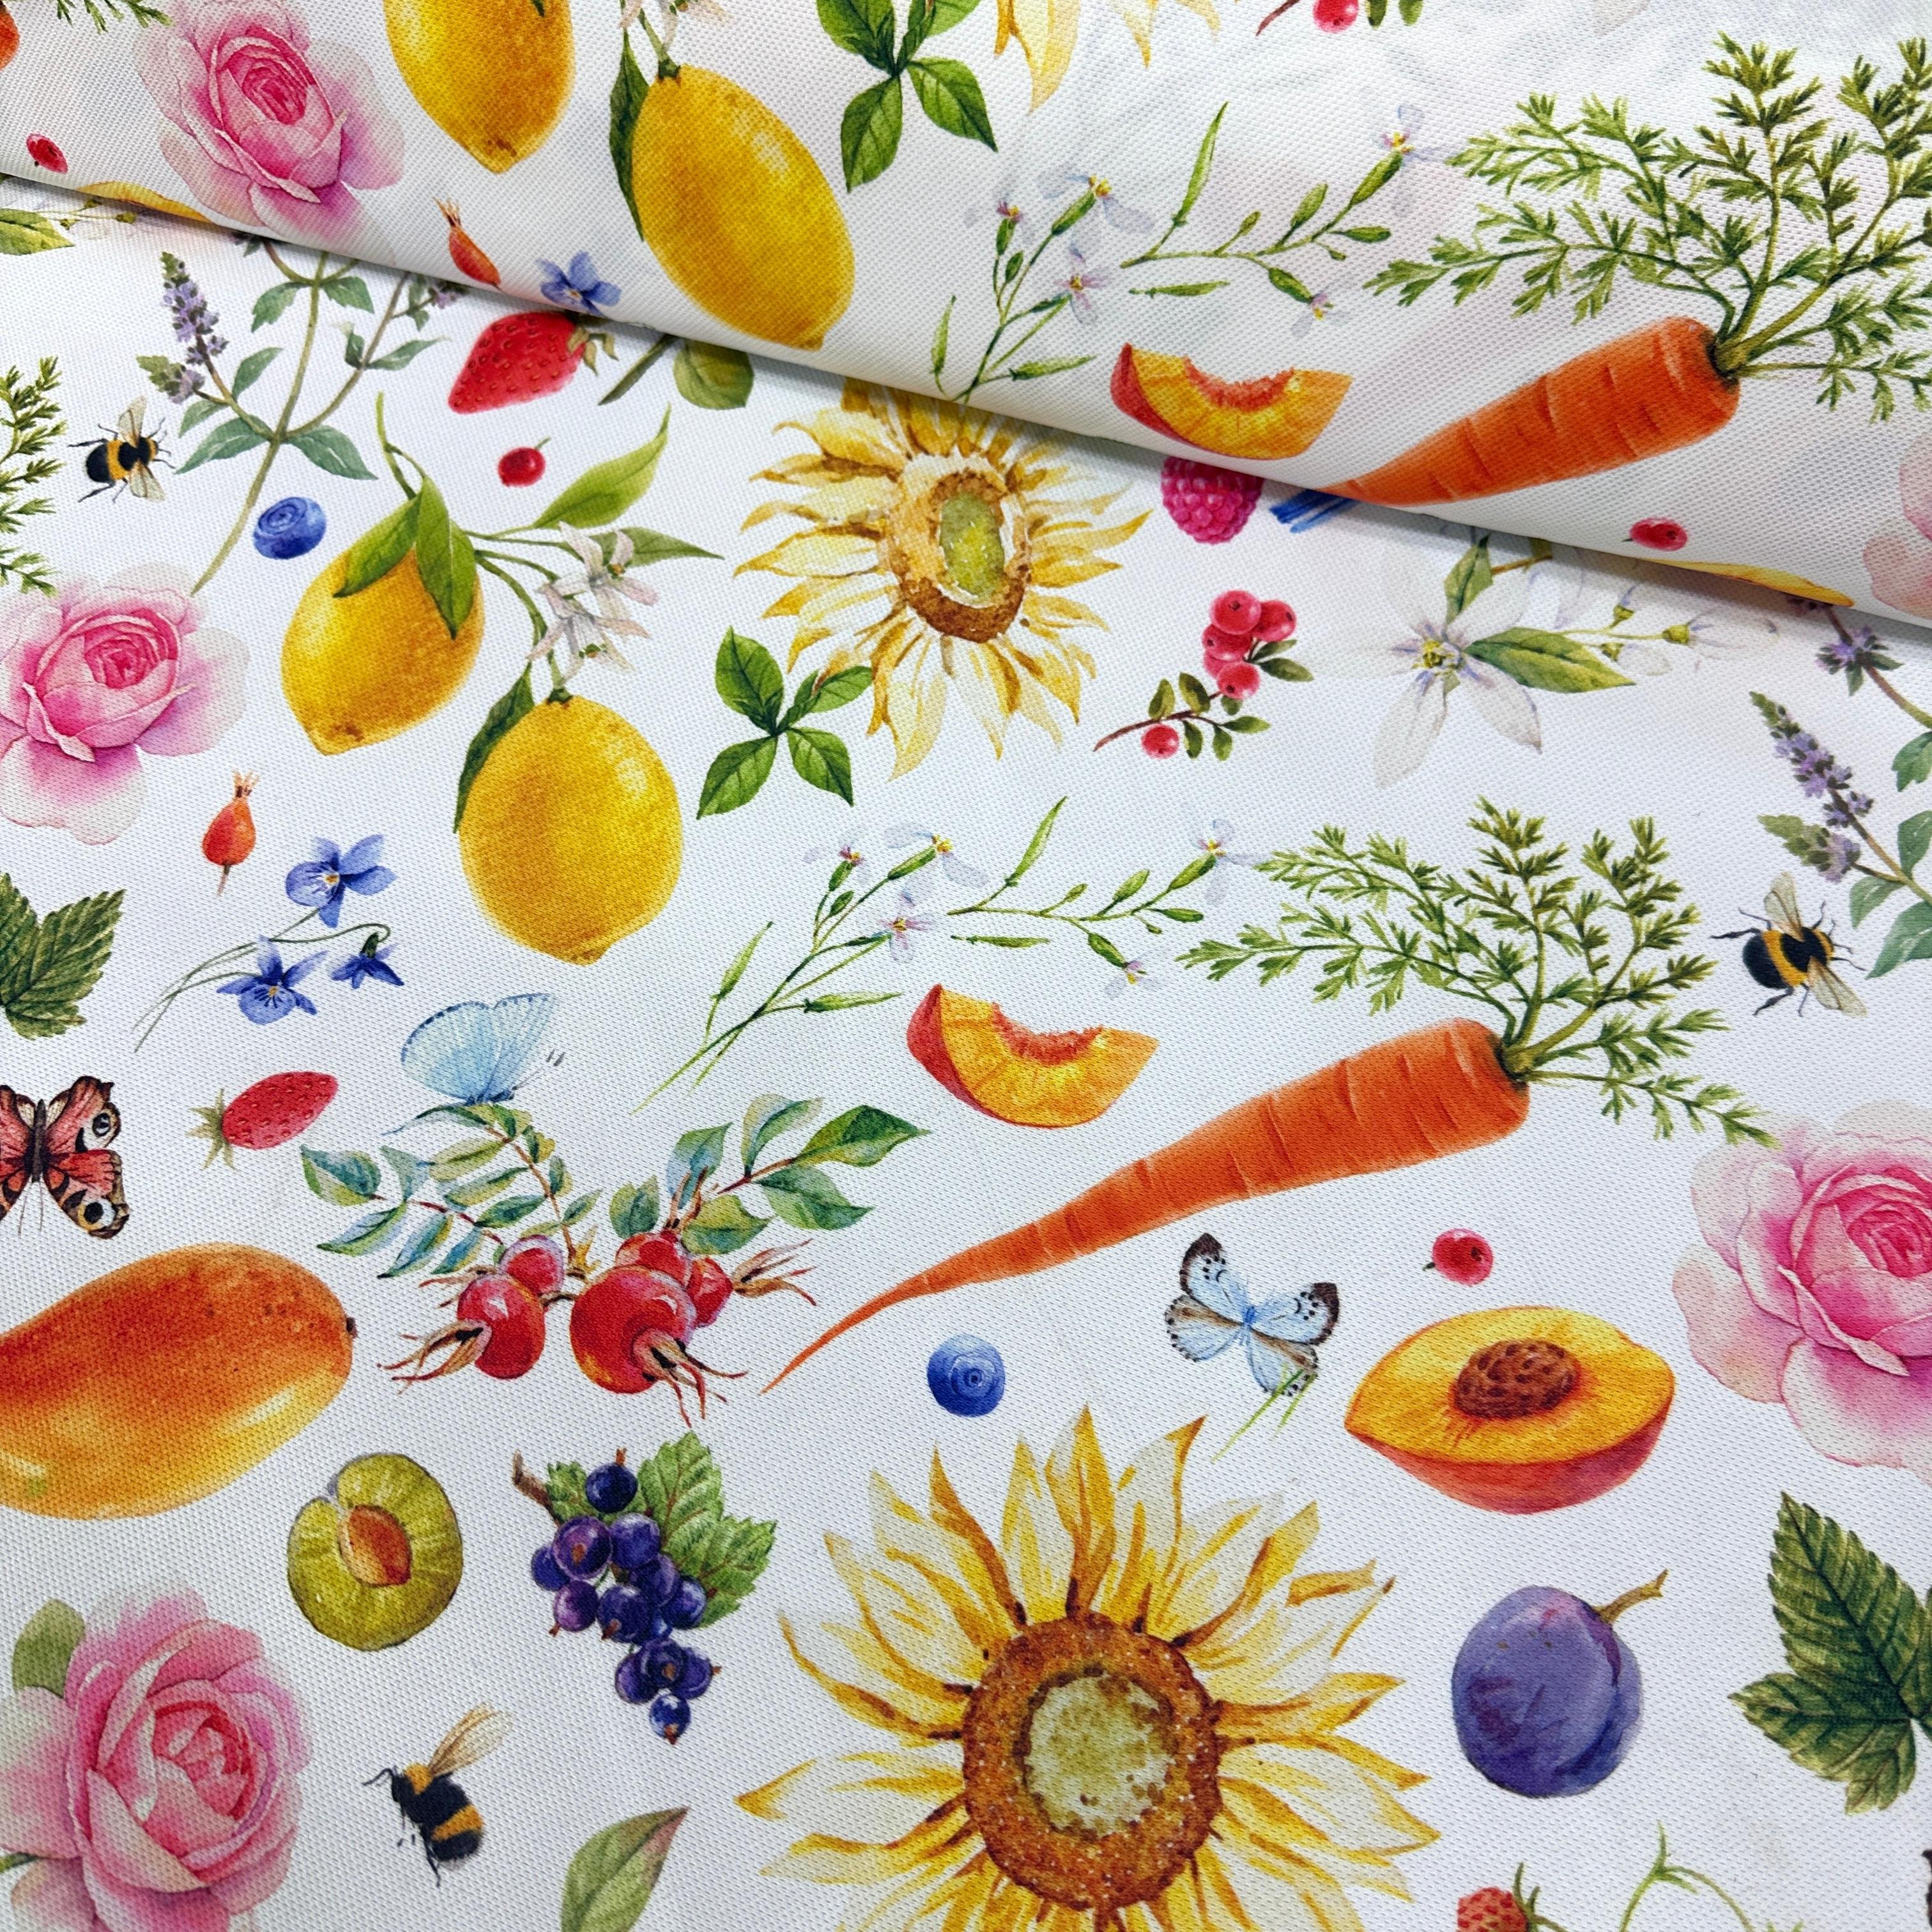 Flowers and Vegetables Digital Printing Fabric